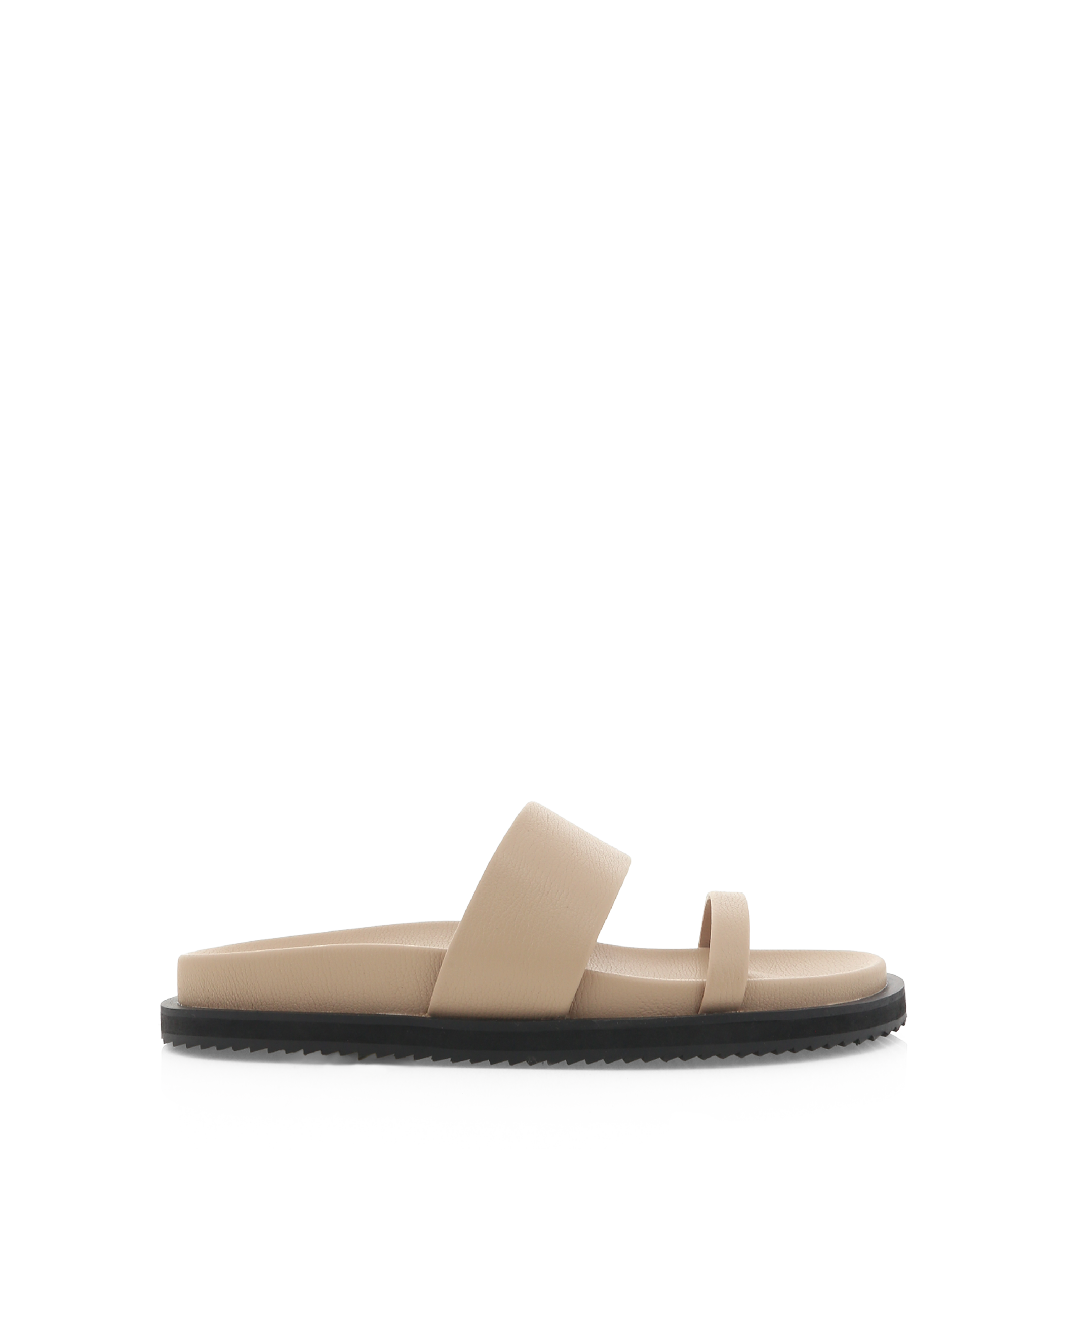 TAMIA - BISCUIT-Sandals-Billini-Billini